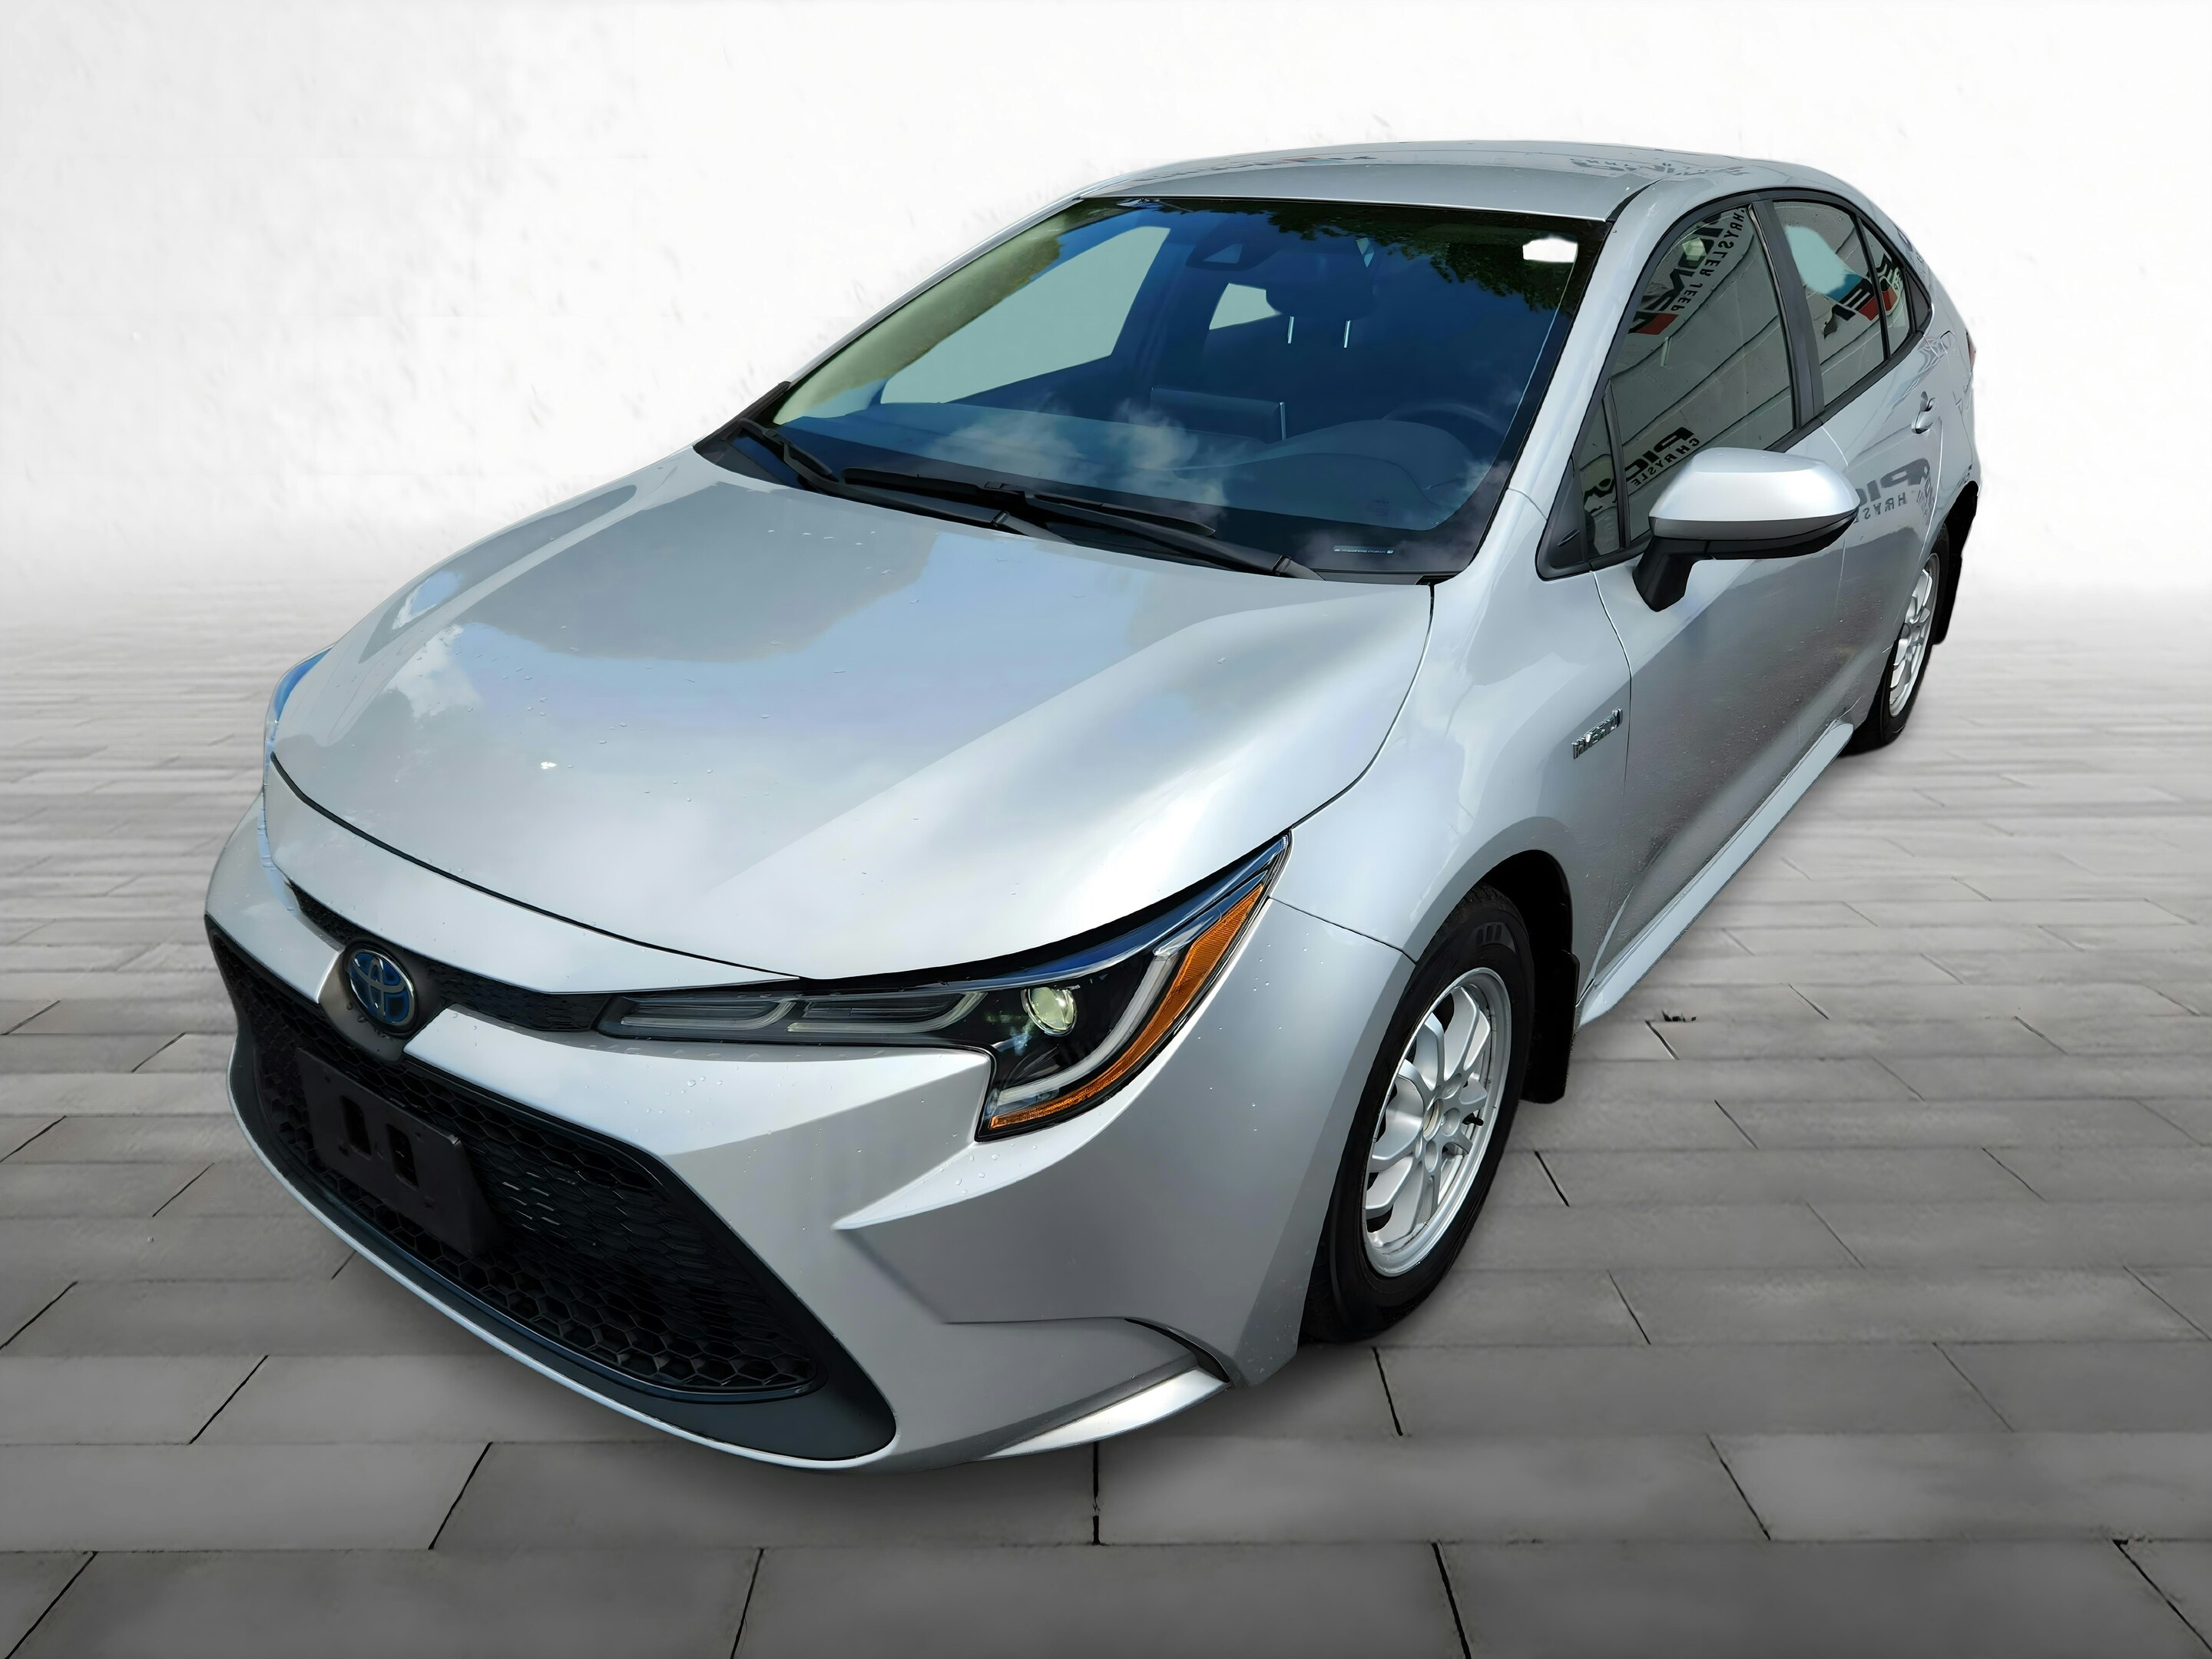 2021 Toyota Corolla Hybrid CVT  - Heated Seats [
  "Heated Seats",
 